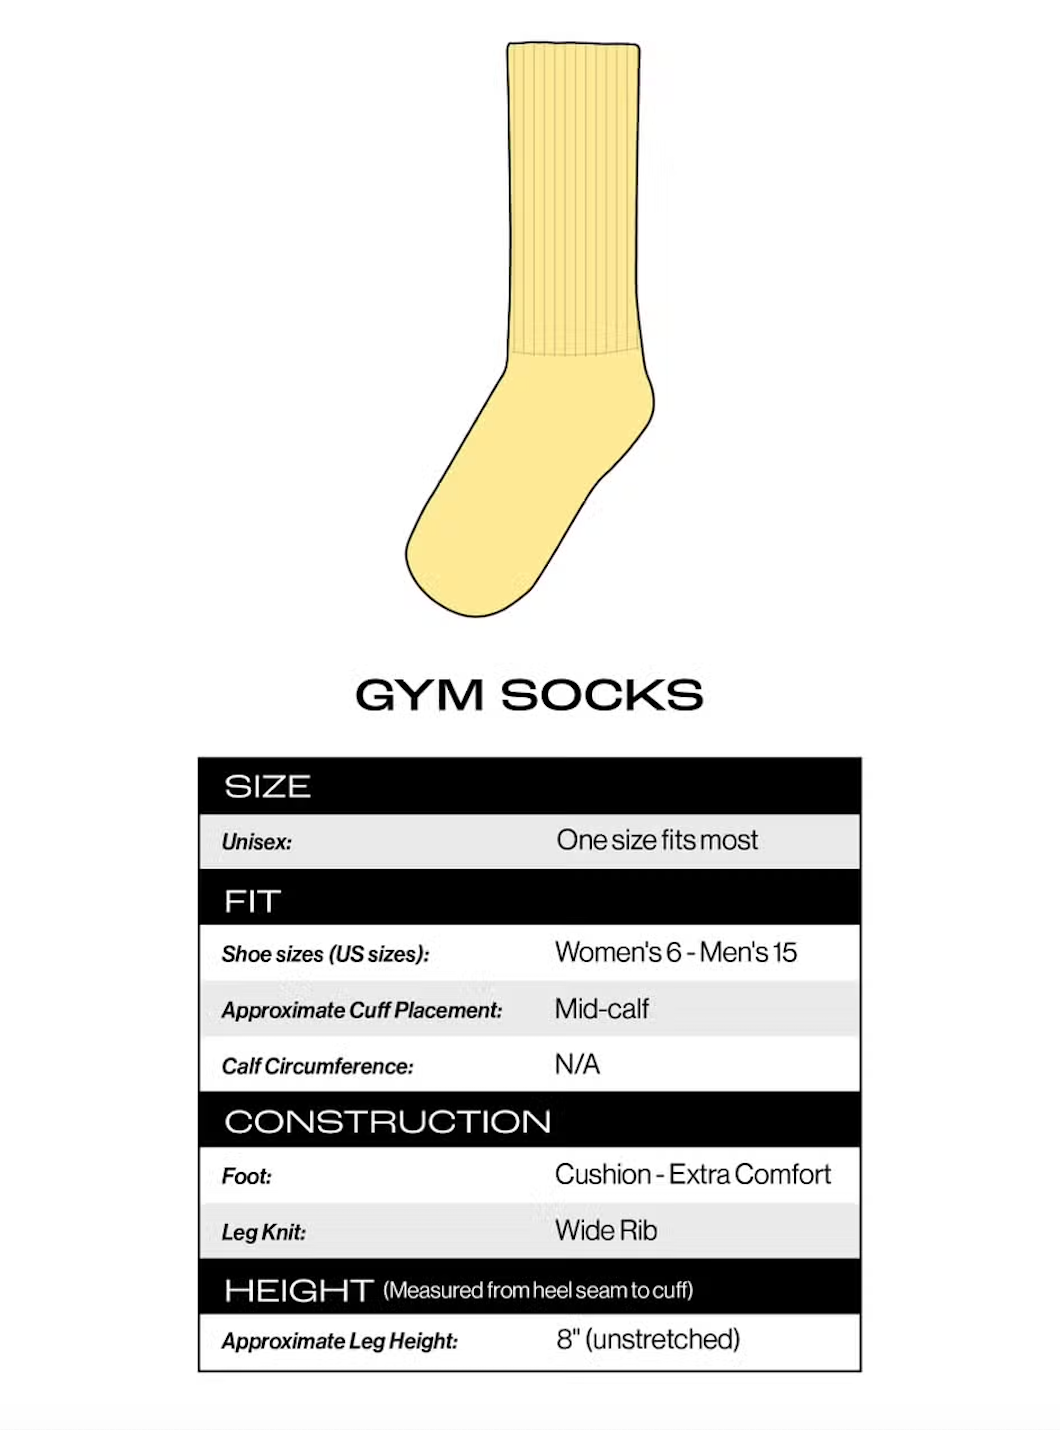 Miami Gym Socks